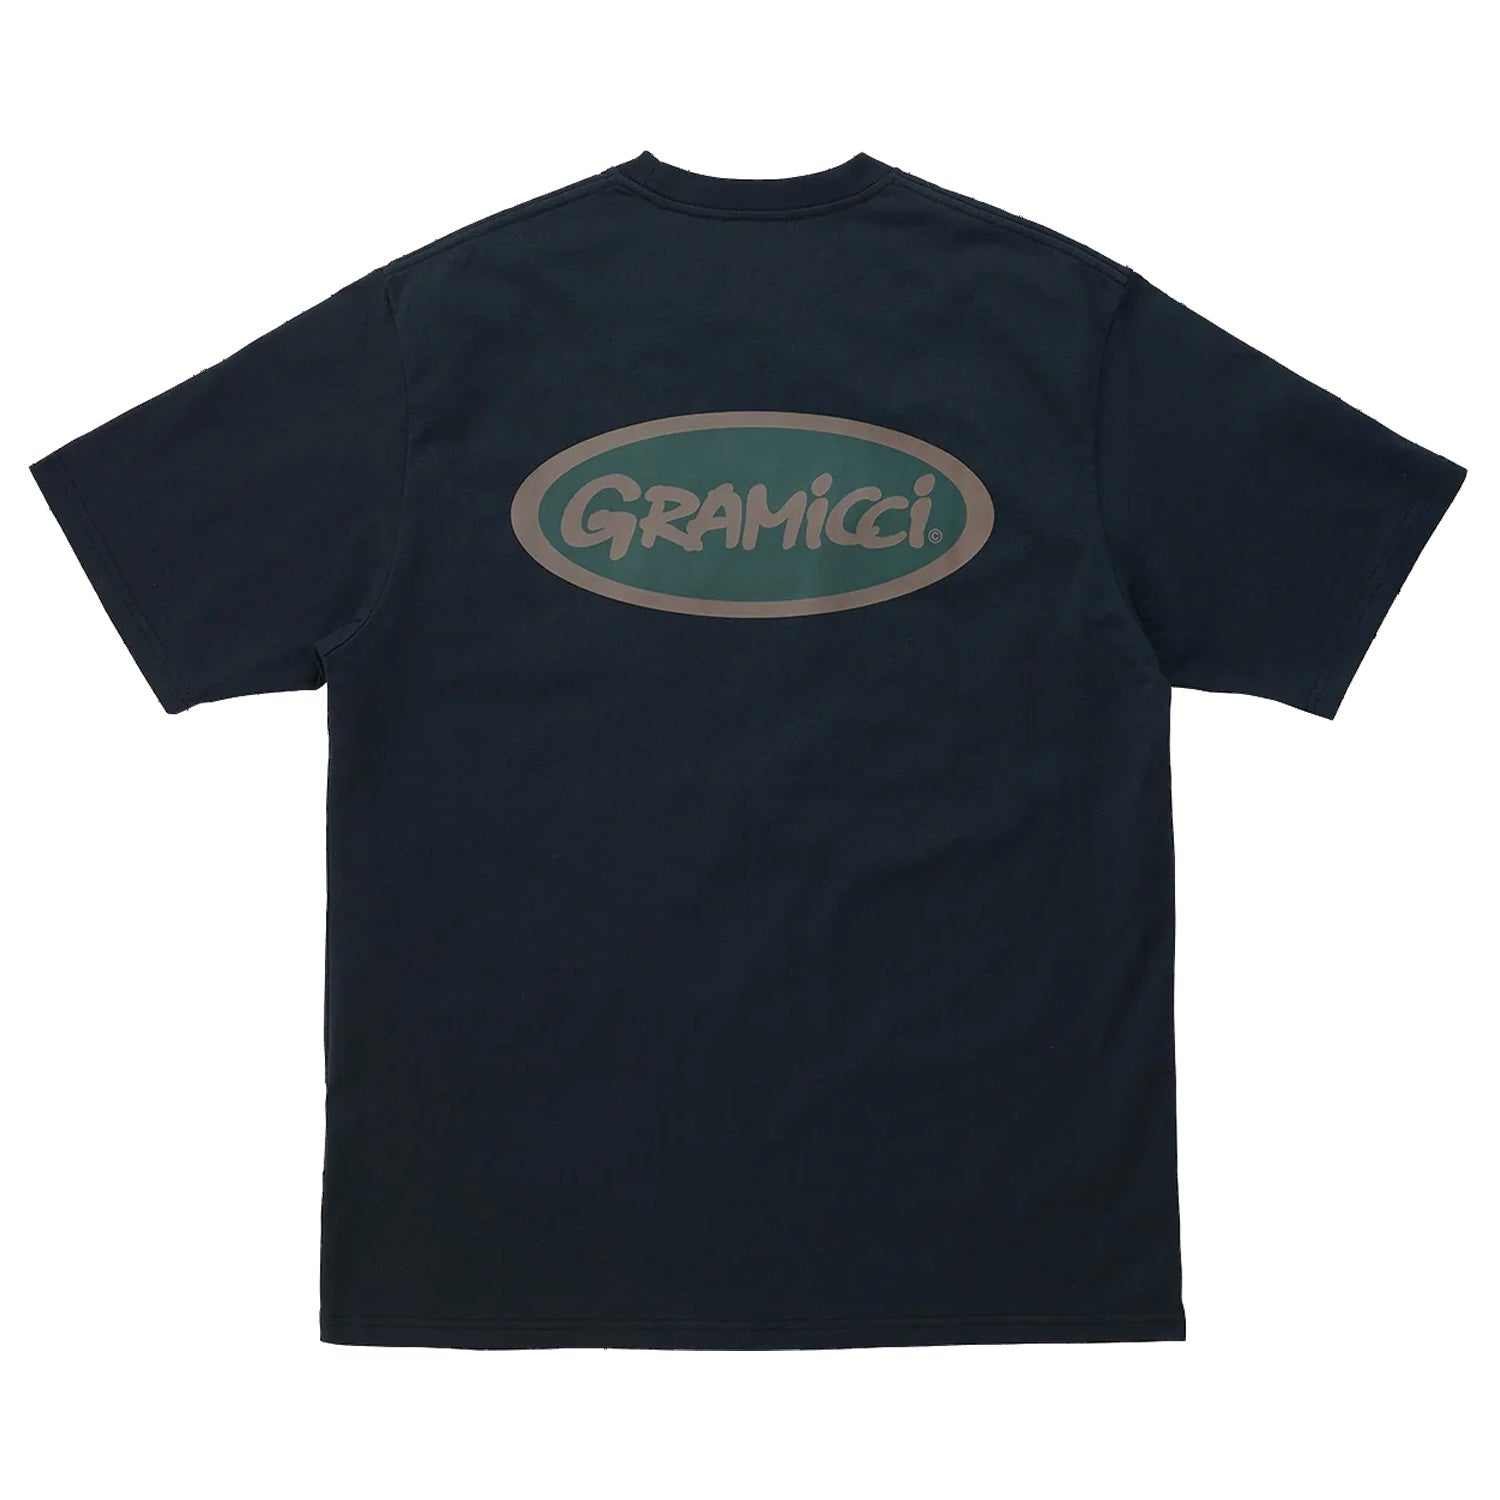 Gramicci Oval T-Shirt - Vintage Black